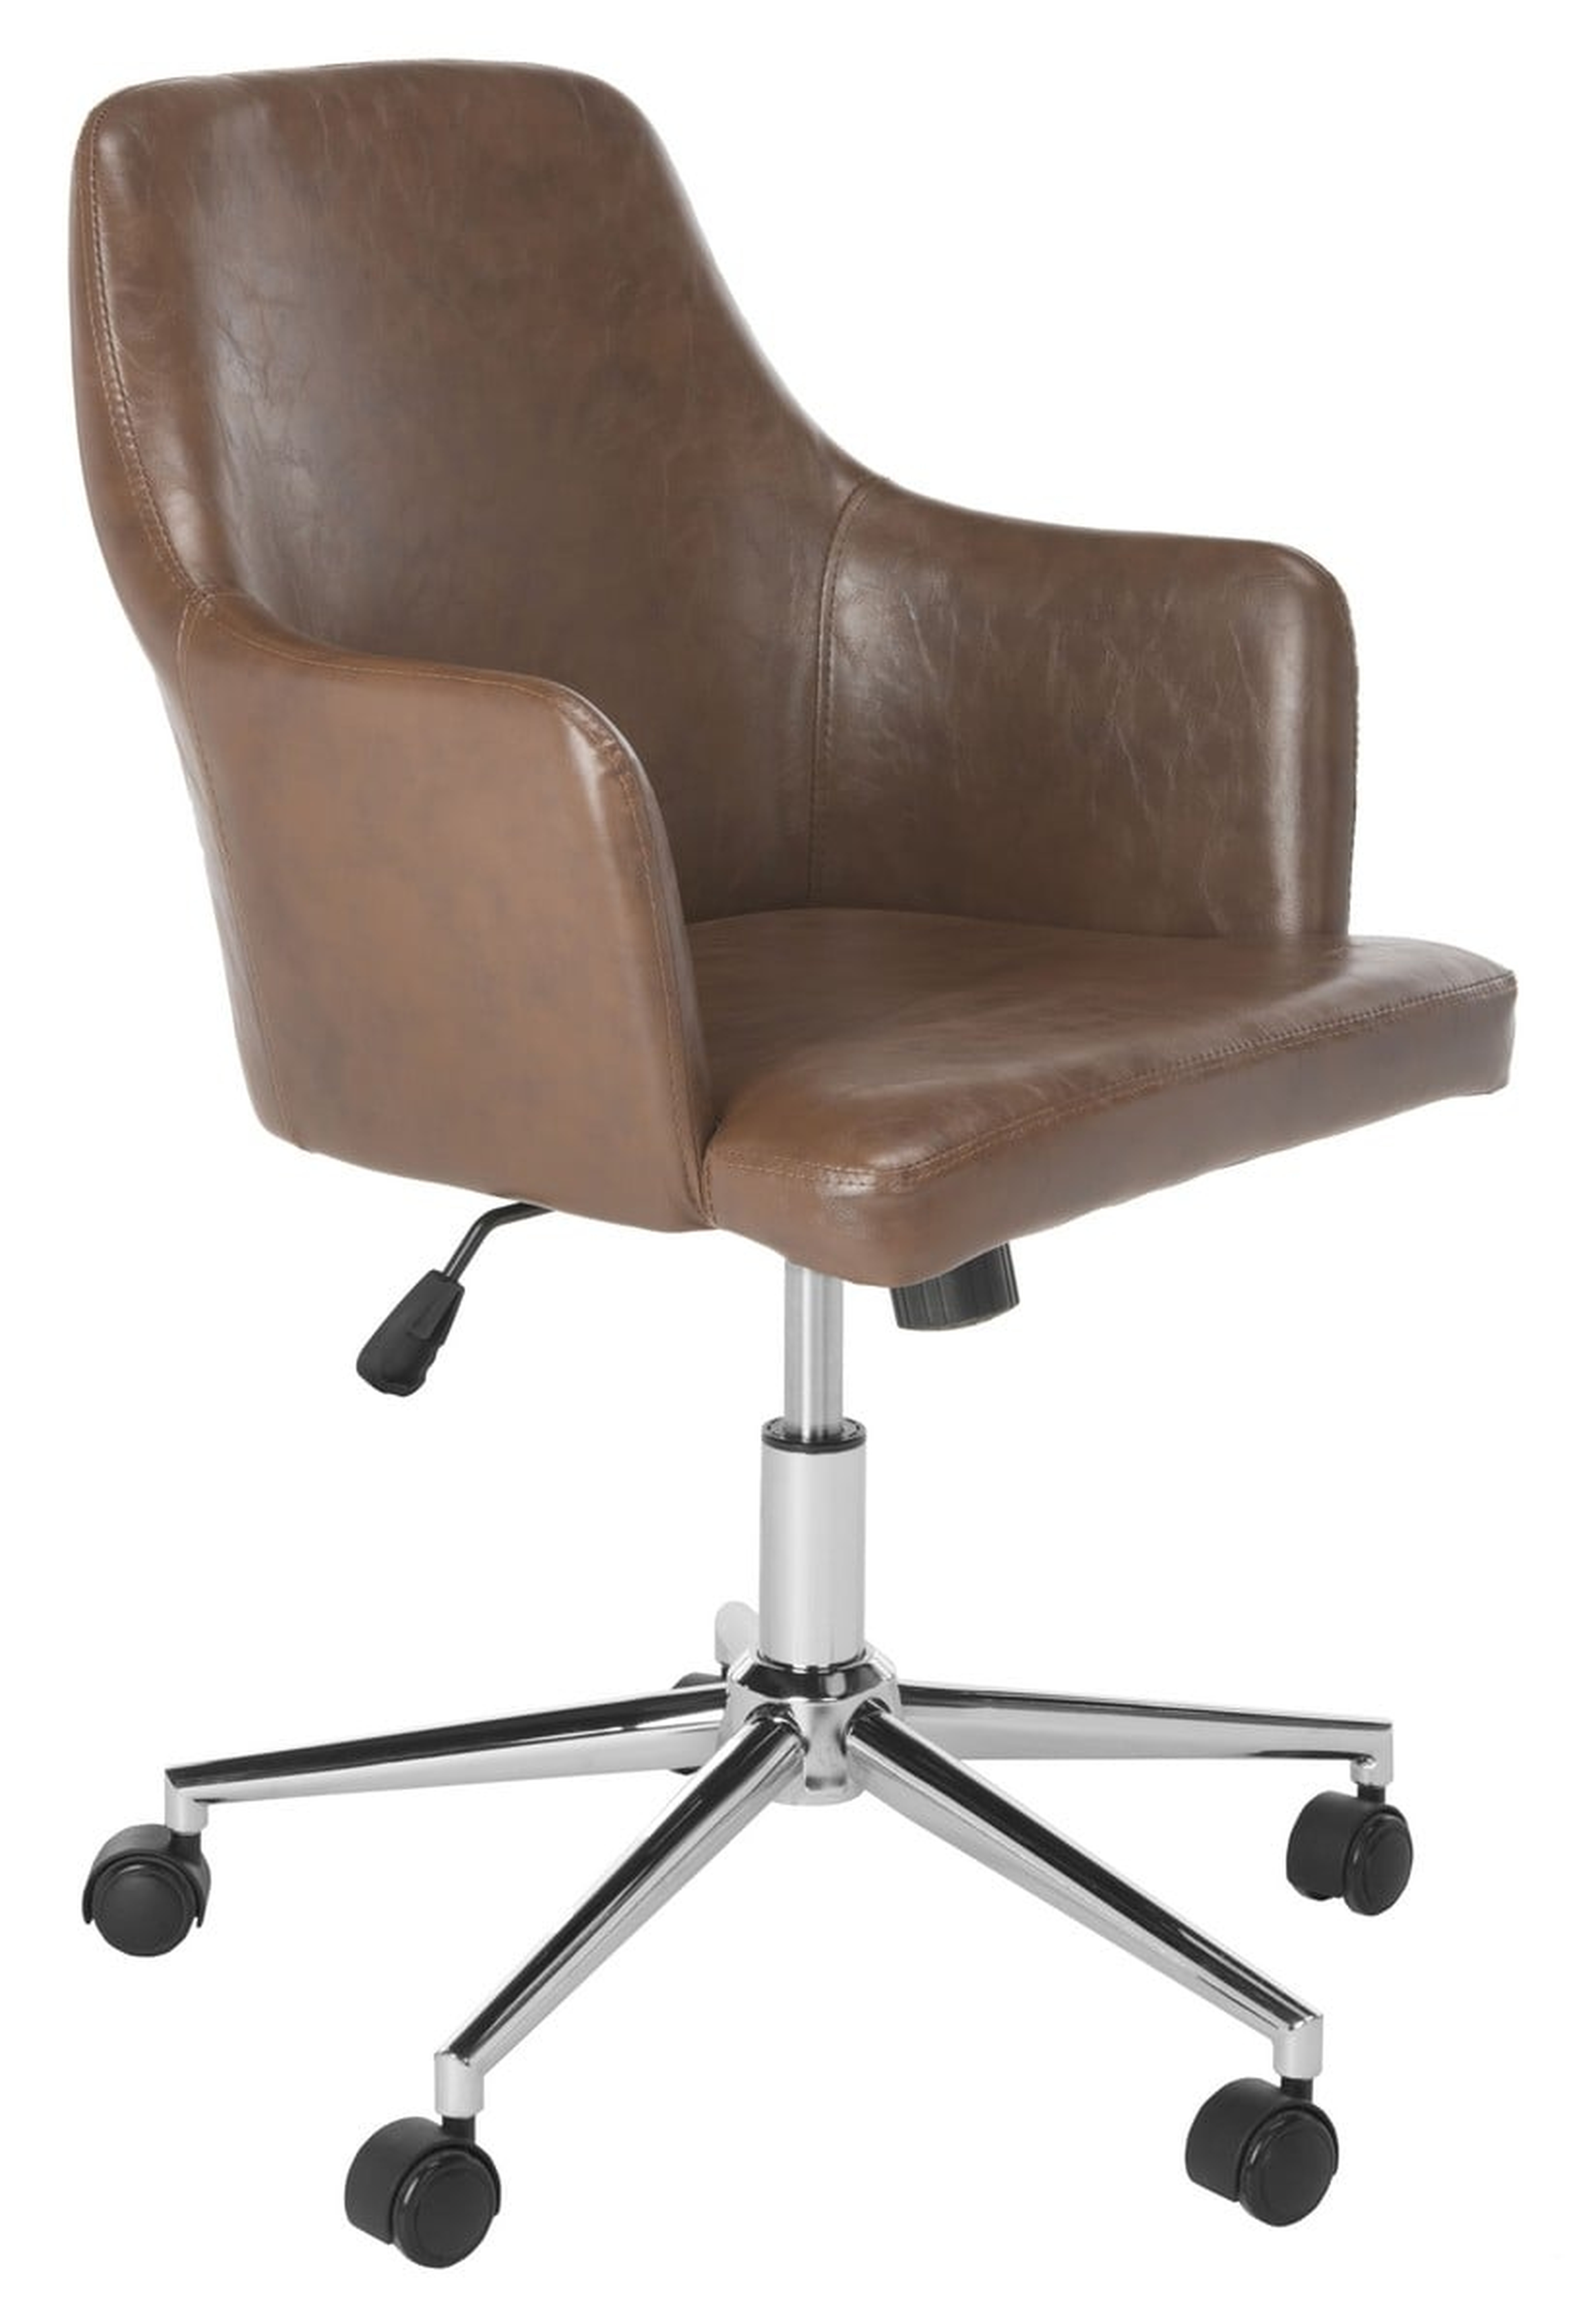 Cadence Swivel Office Chair - Brown/Chrome - Arlo Home - Arlo Home